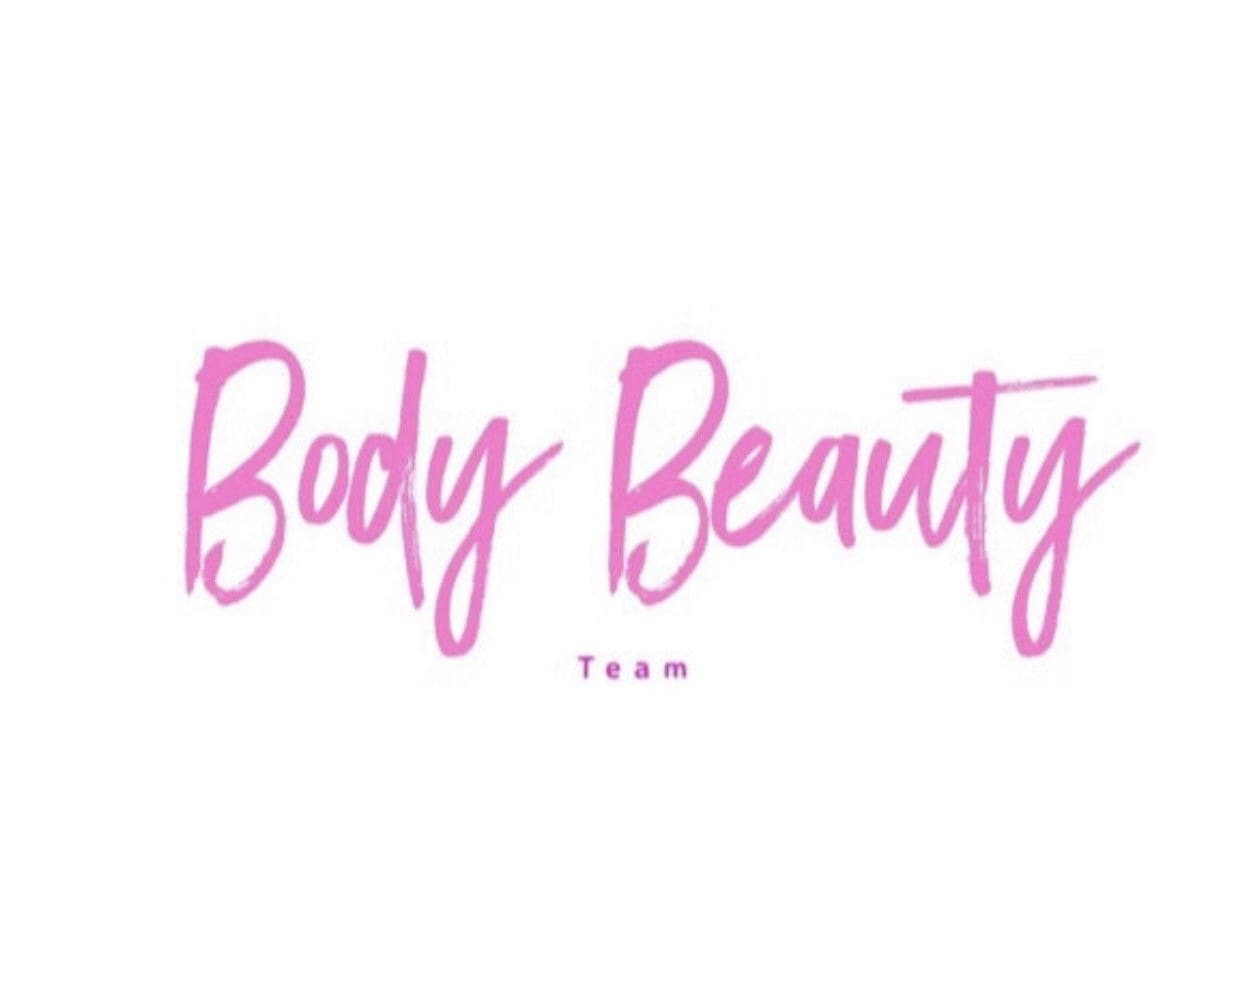 Body Beauty Team